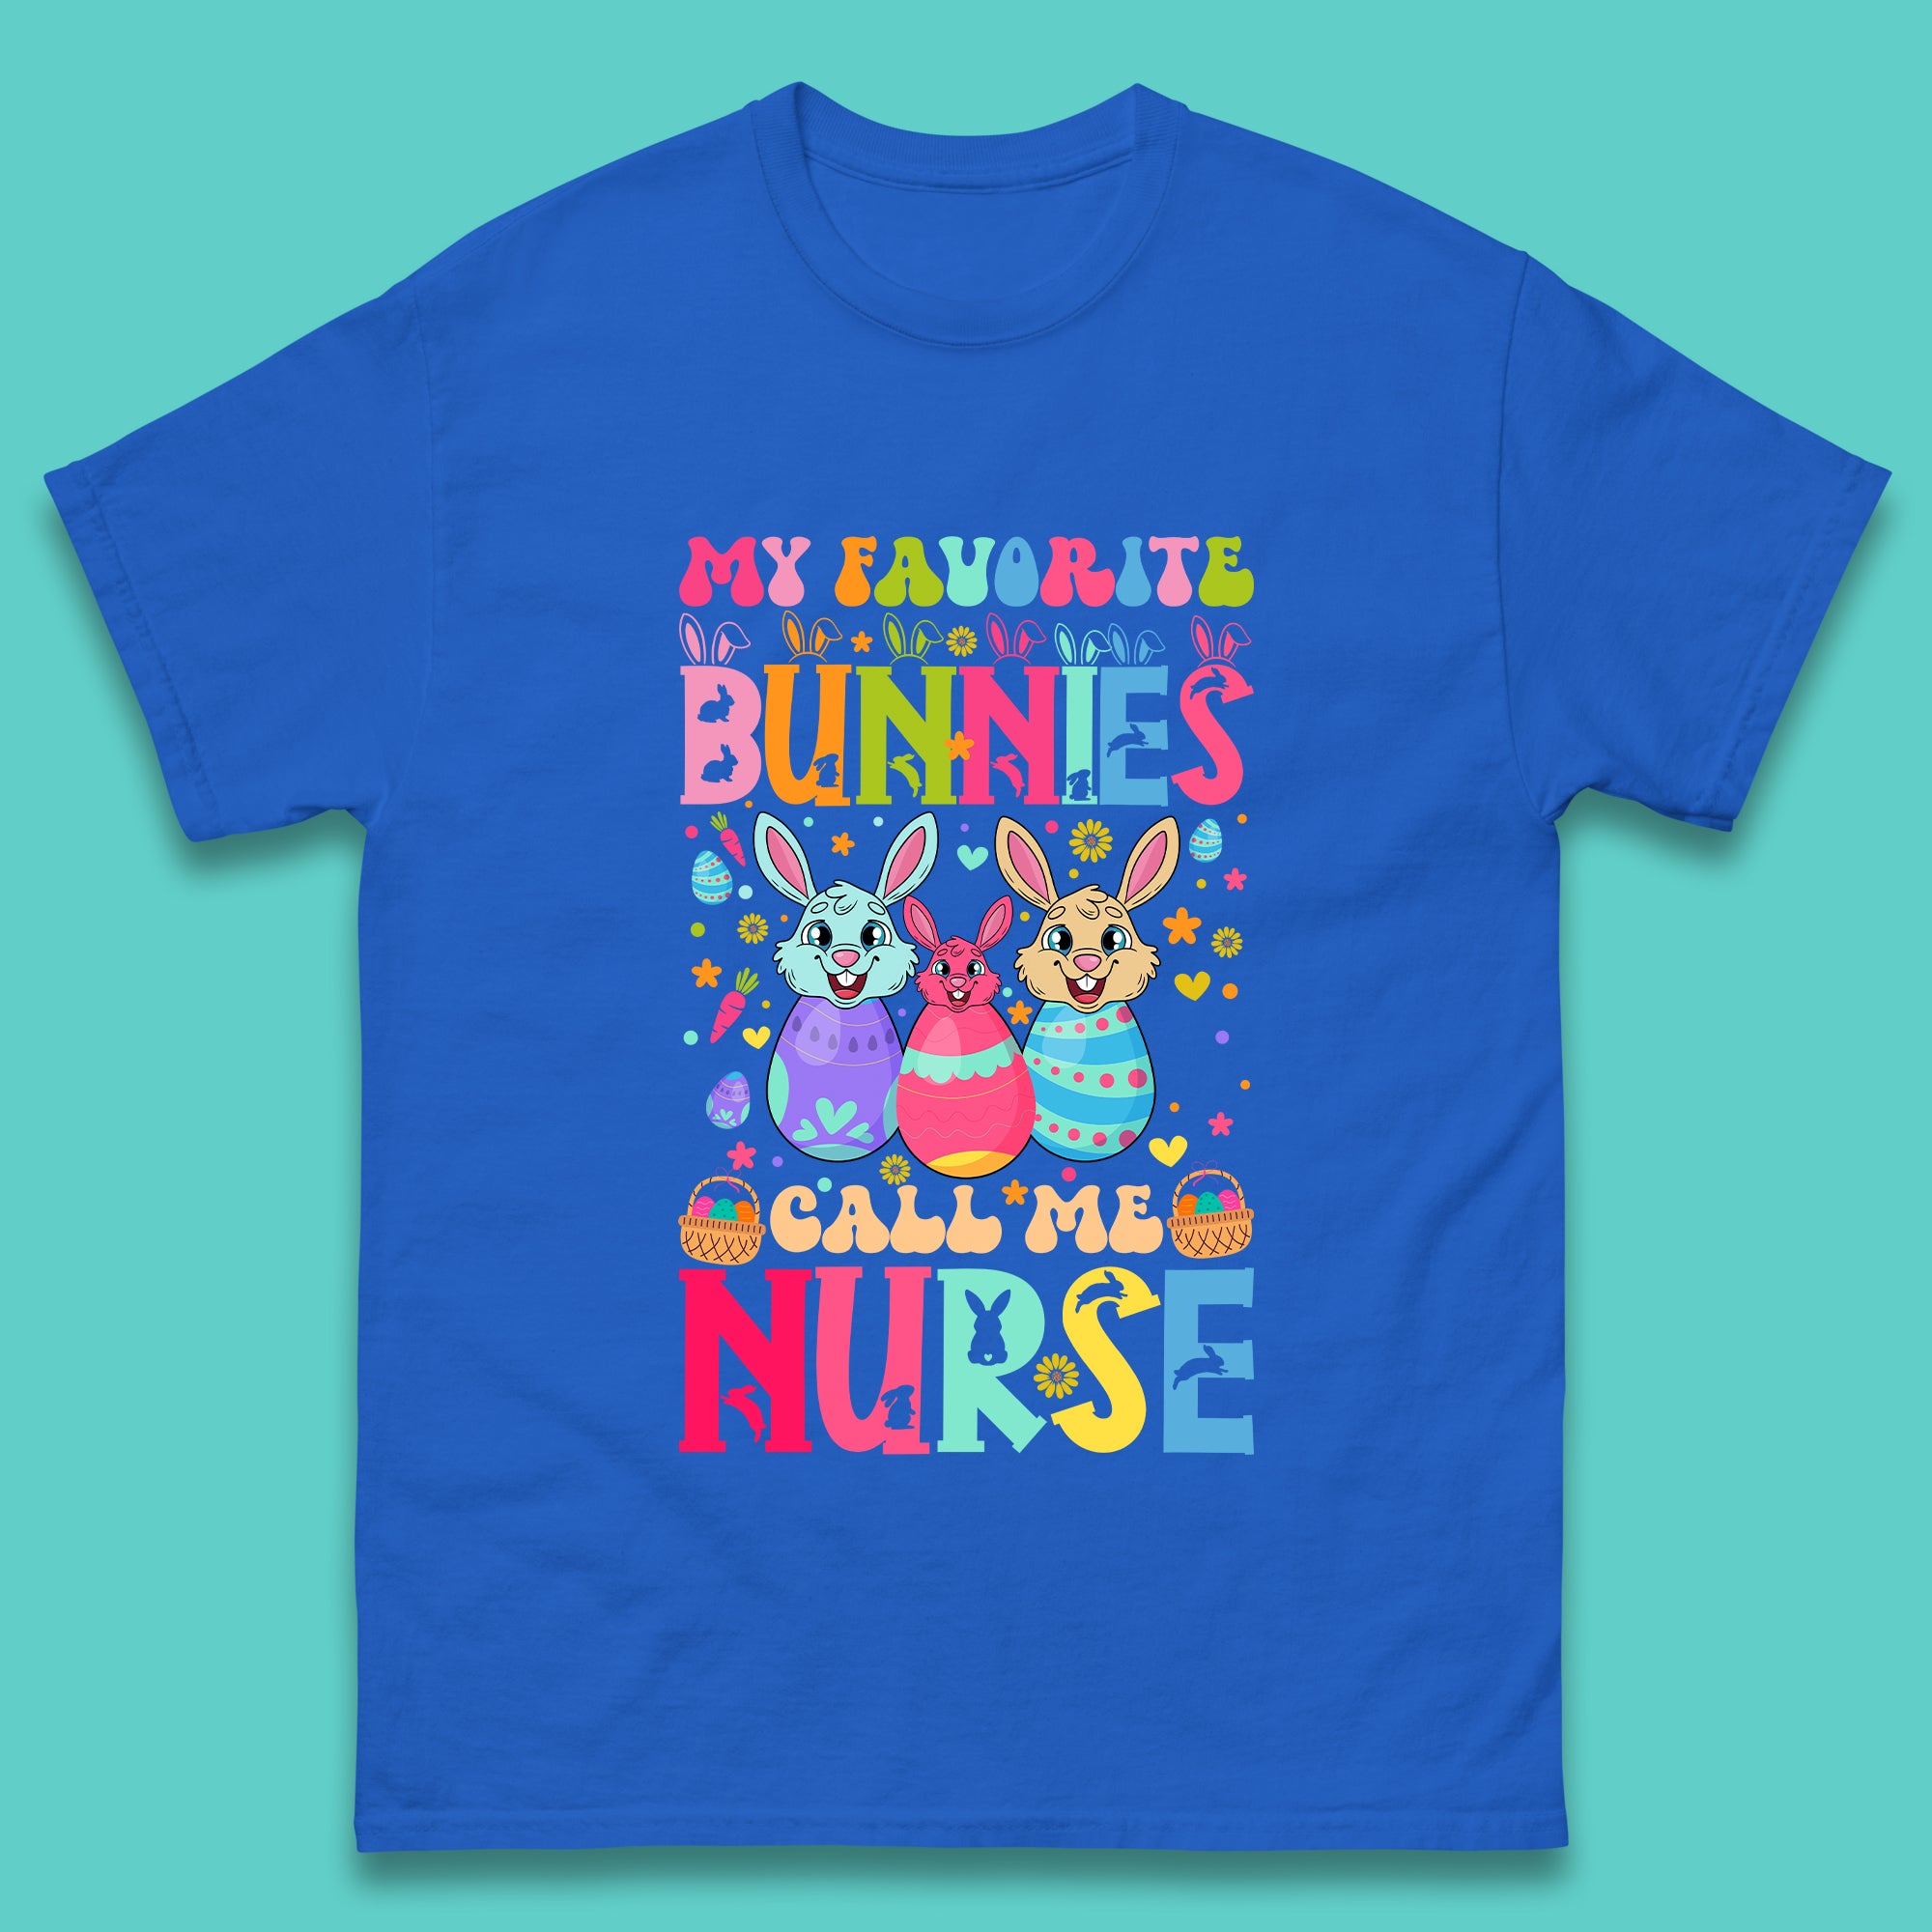 My Favorite Bunnies Call Me Nurse Mens T-Shirt